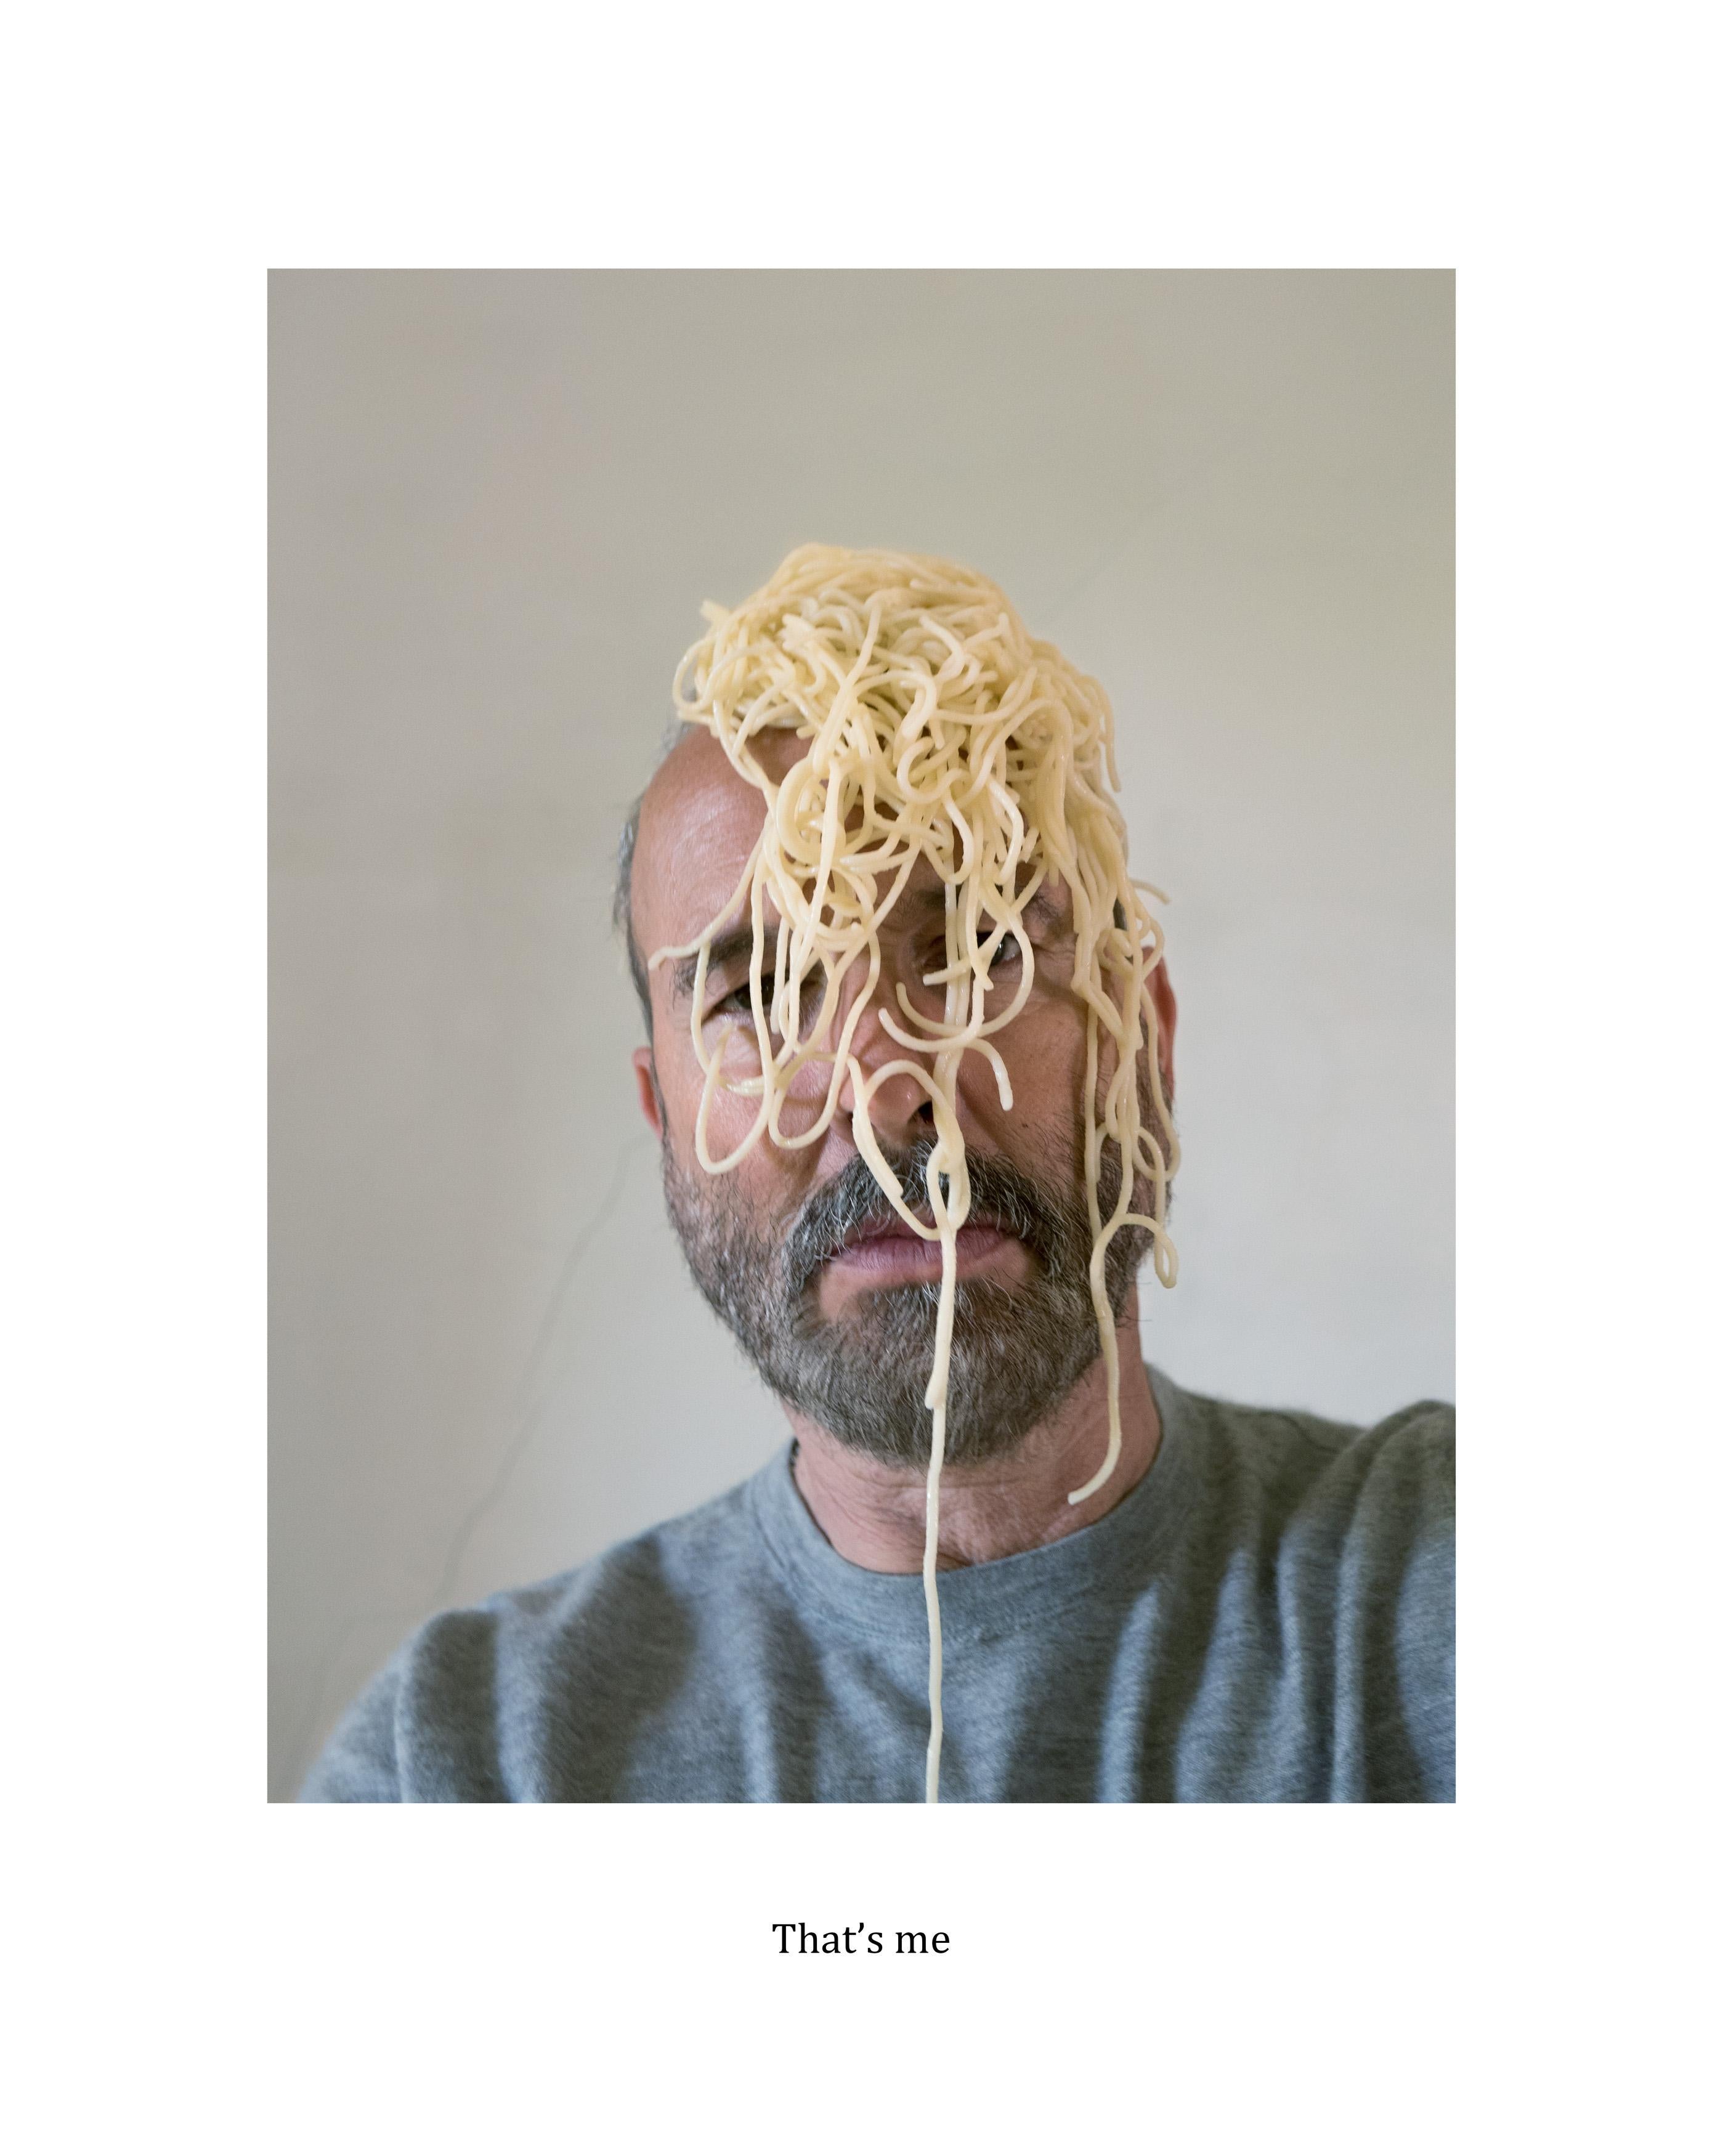 Erwin Wurm Portrait Photograph – Noodle-Skulptur (Das ist mir)